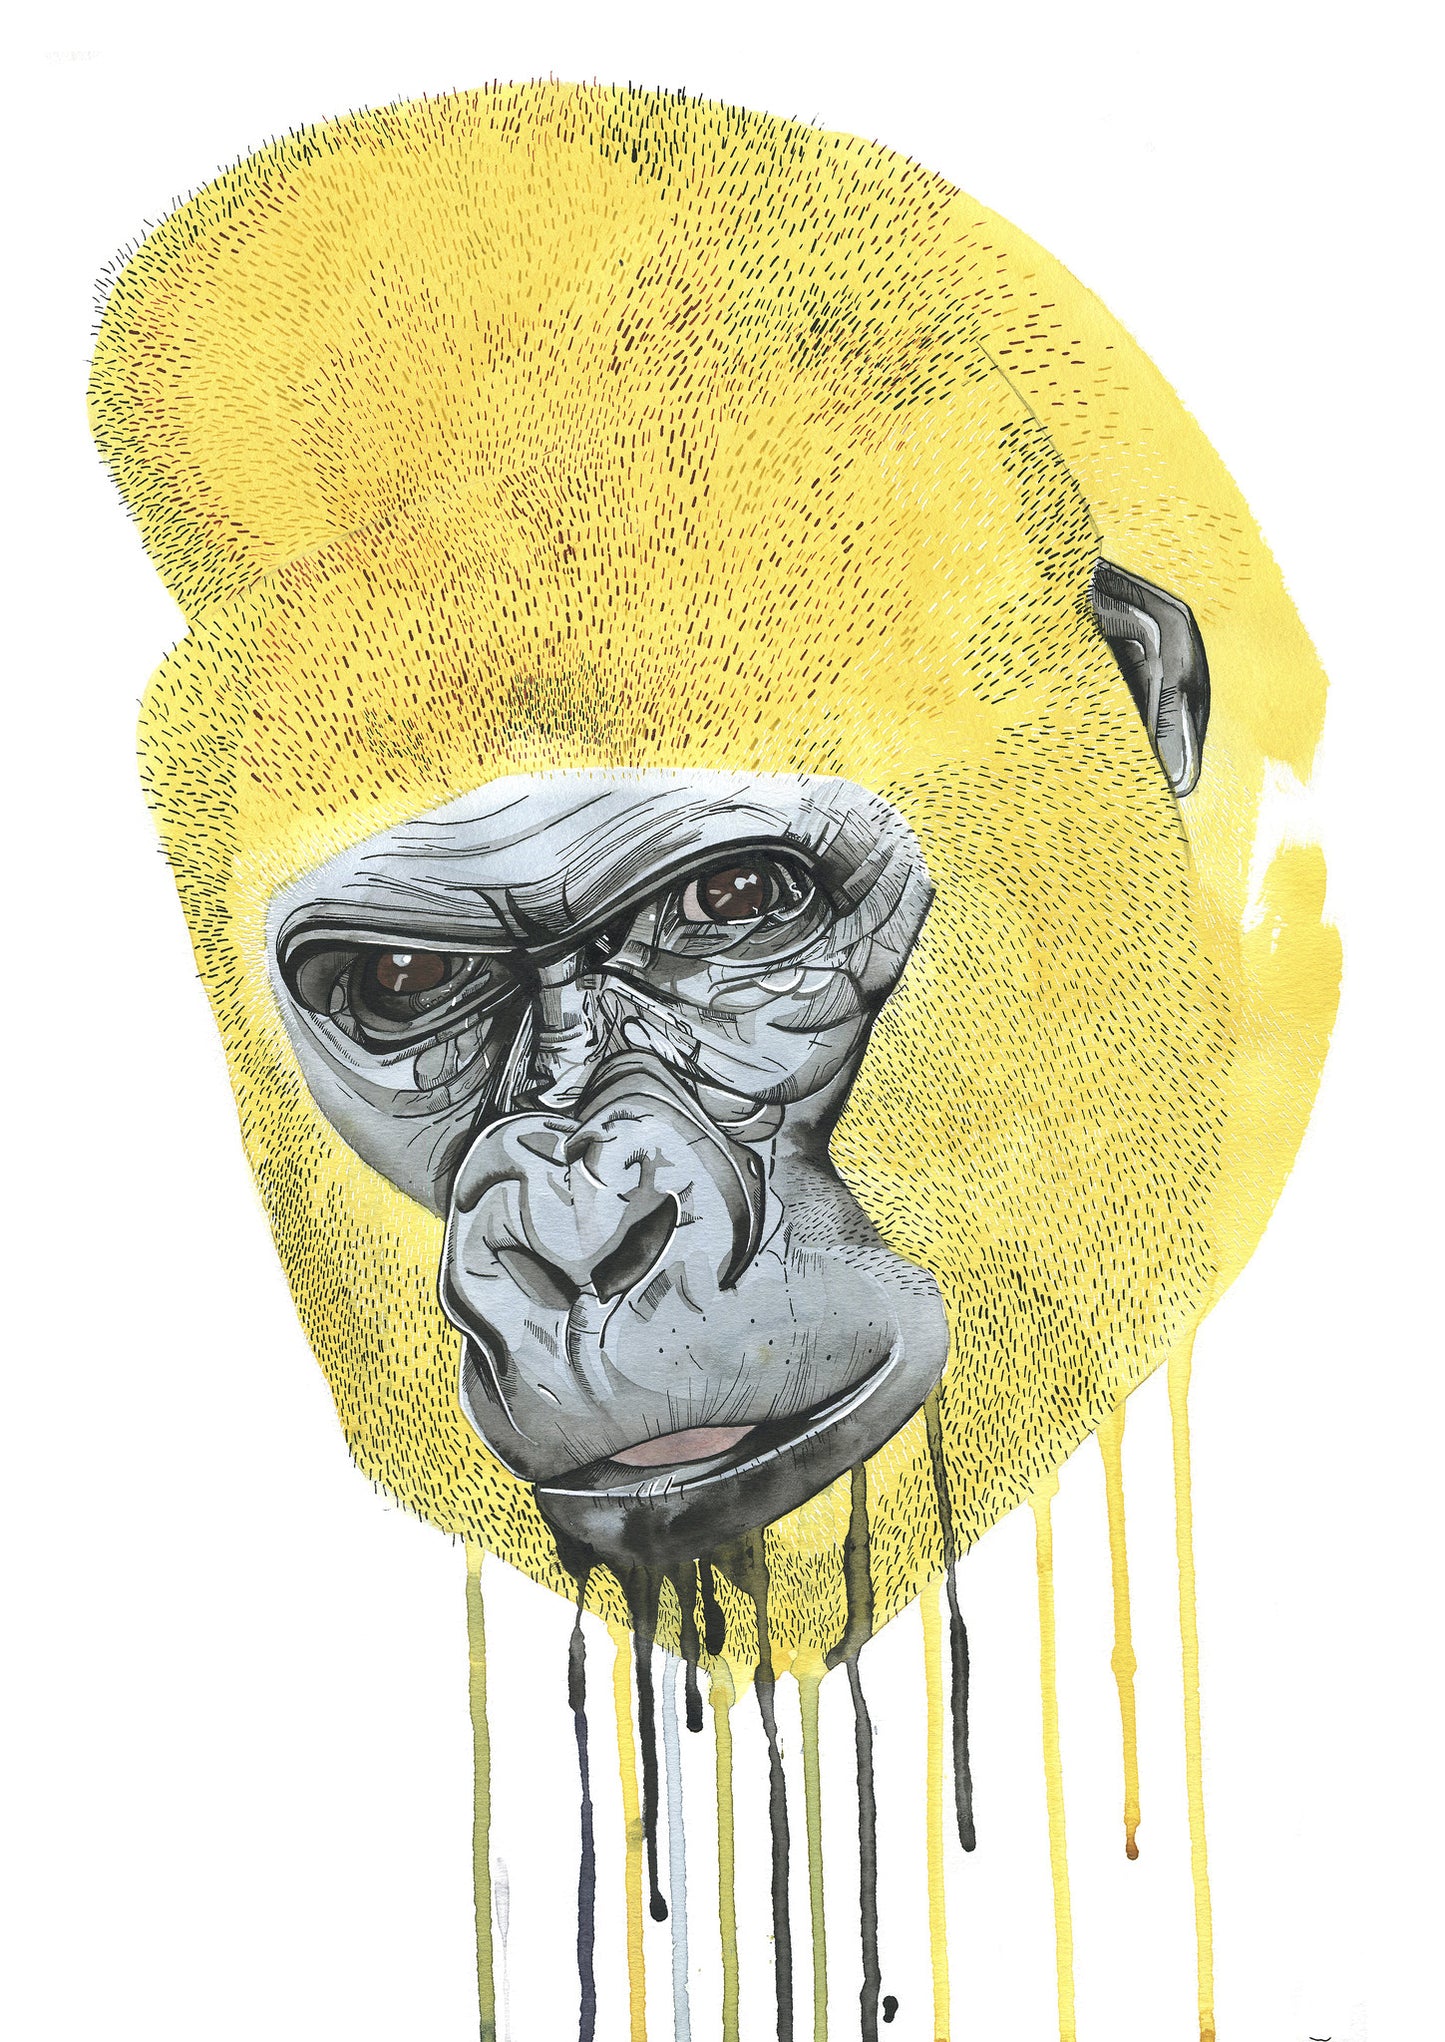 Gorilla A4 print